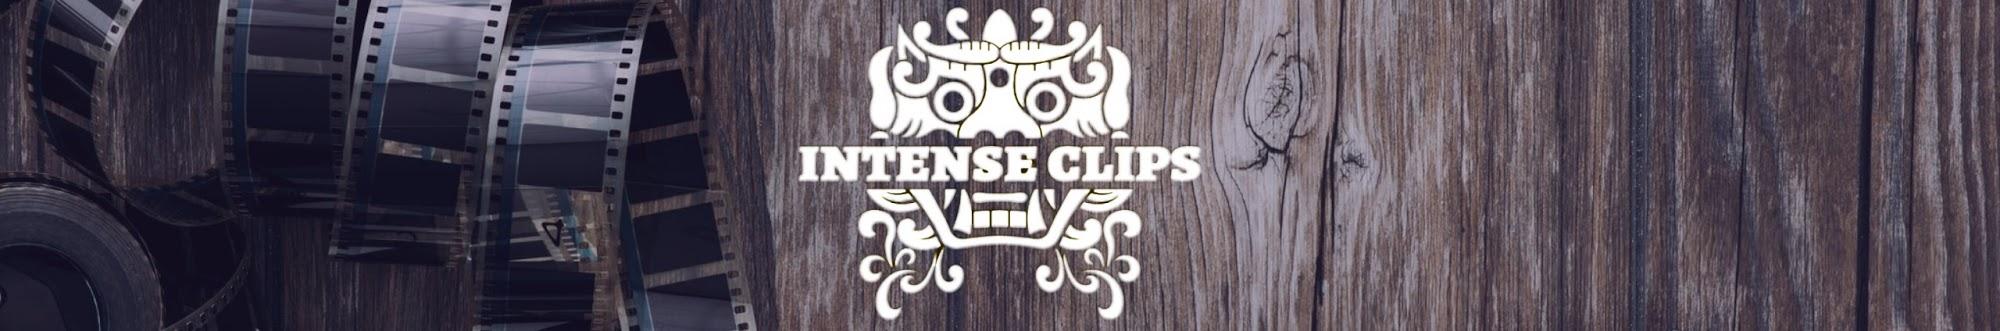 Intense clips